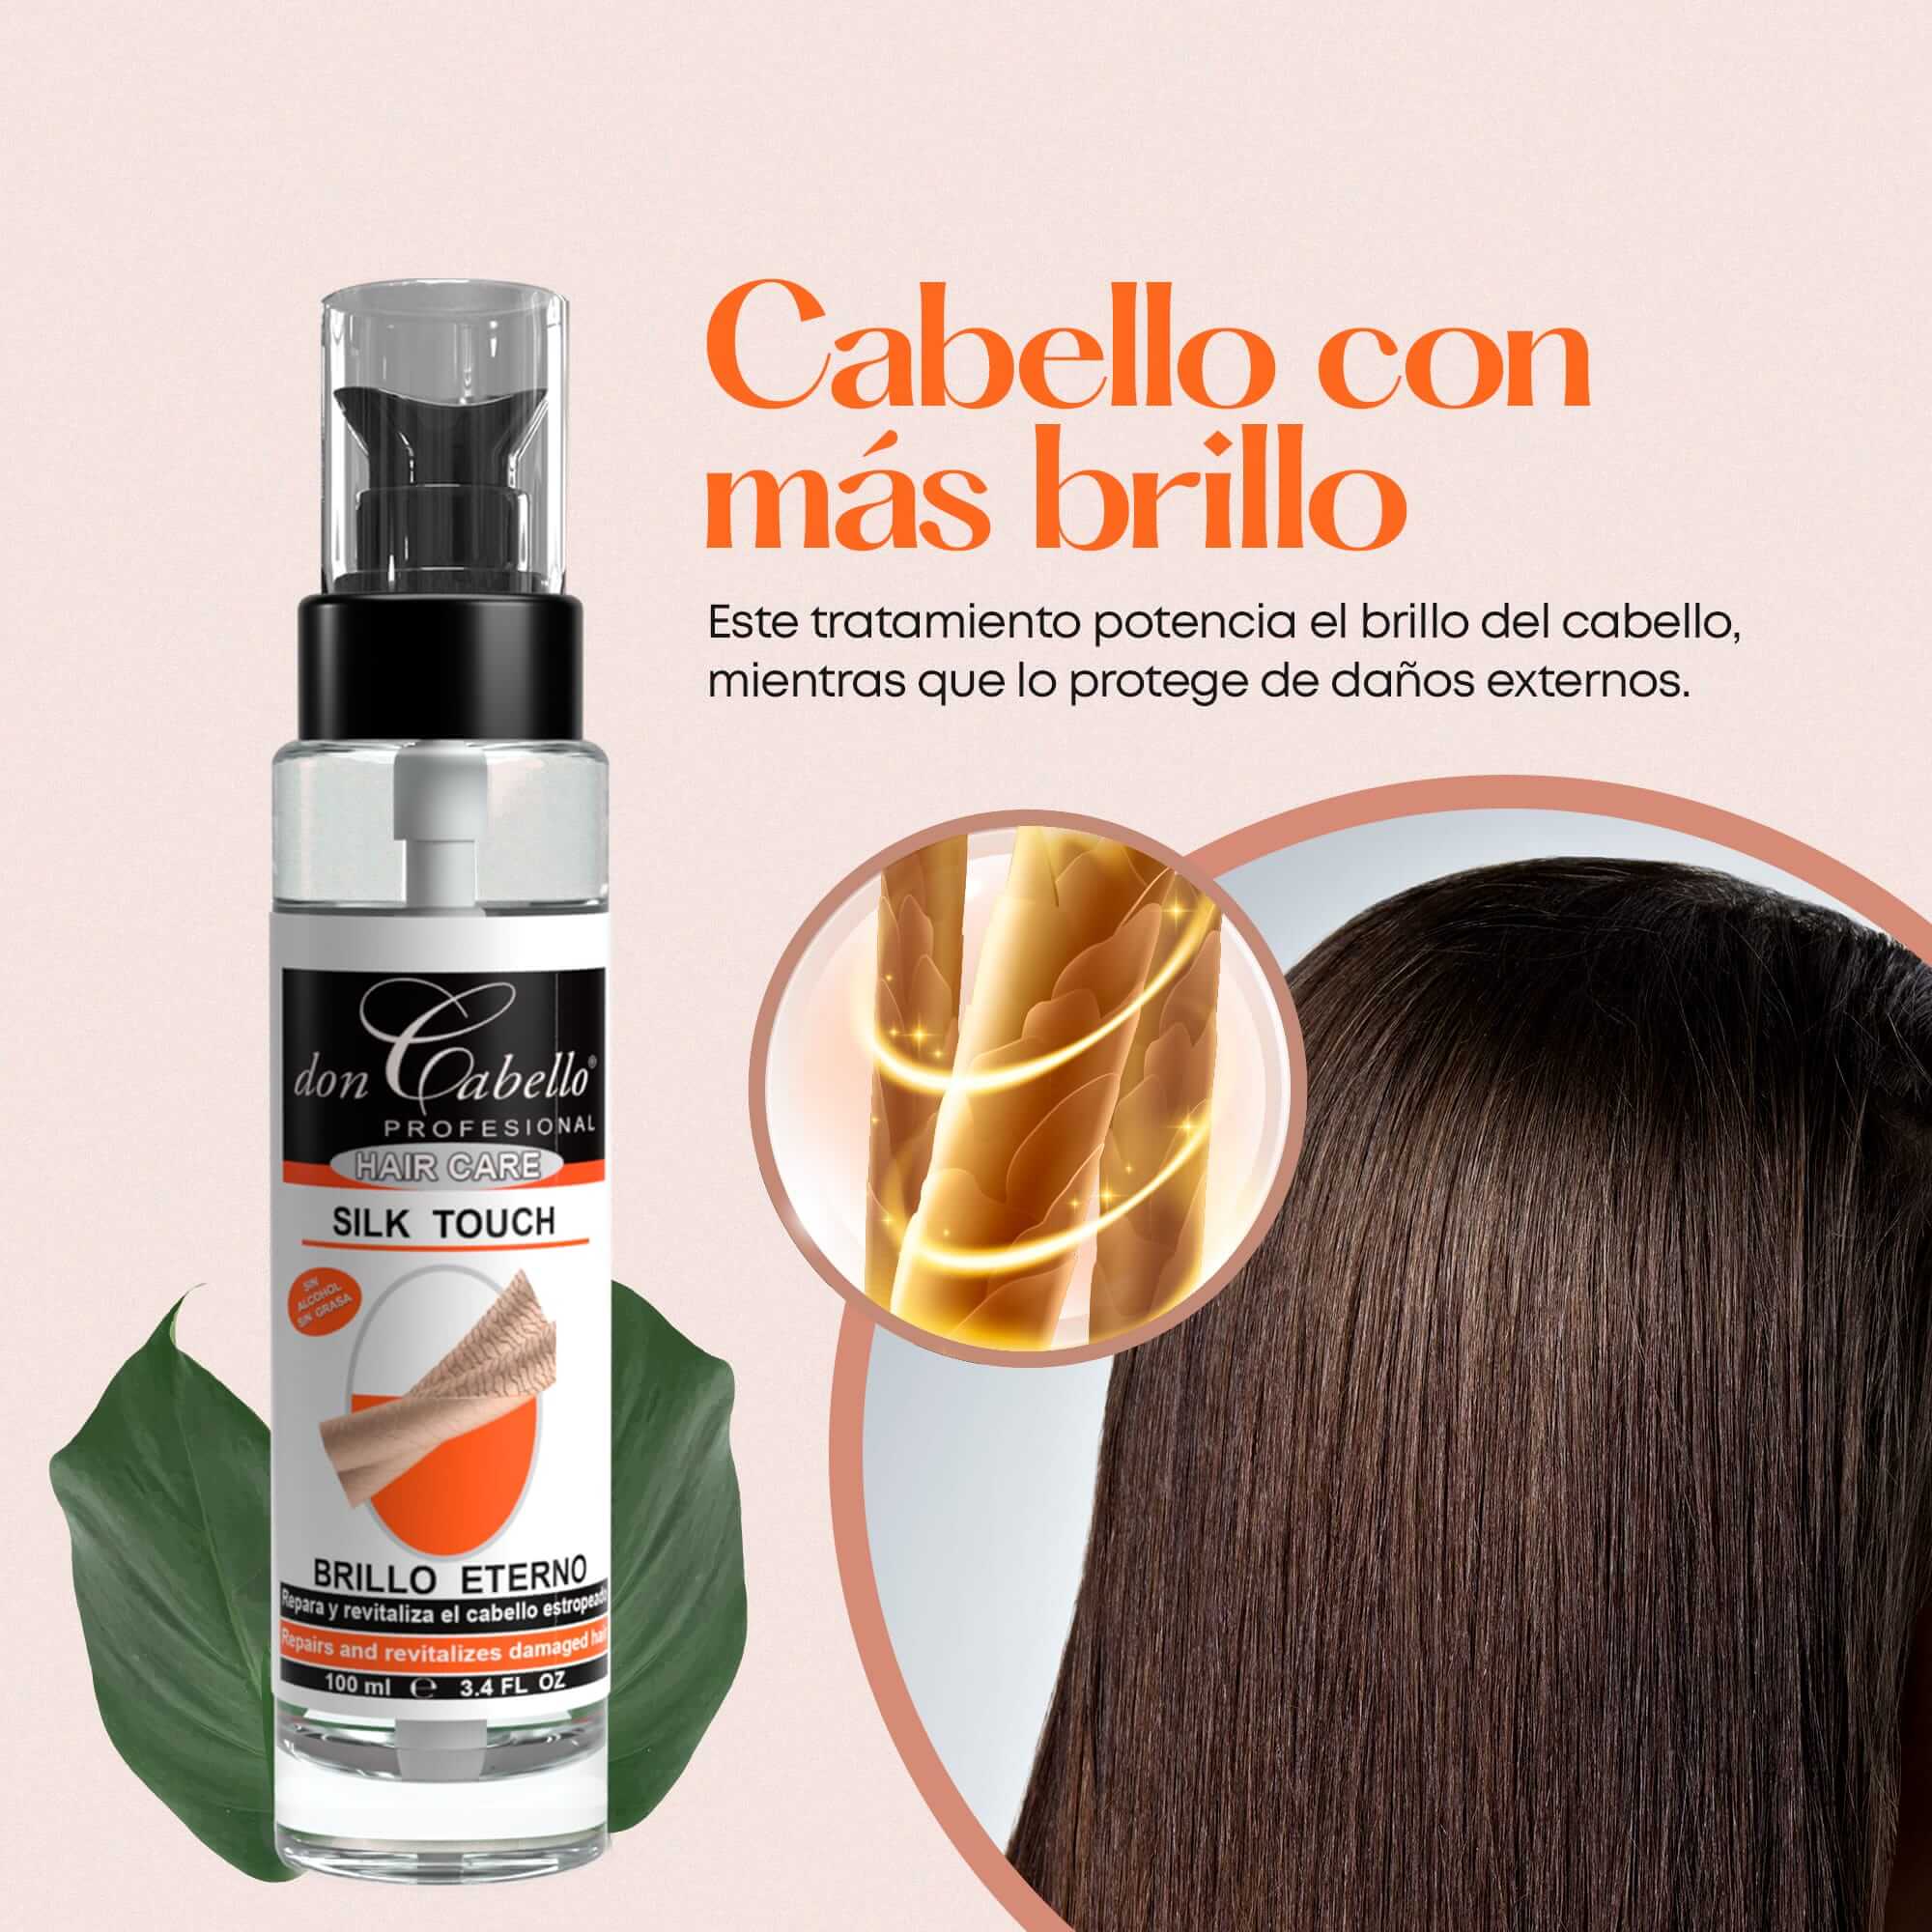 Don Cabello Silk Touch – Proteínas, vitaminas y minerales 100 ml